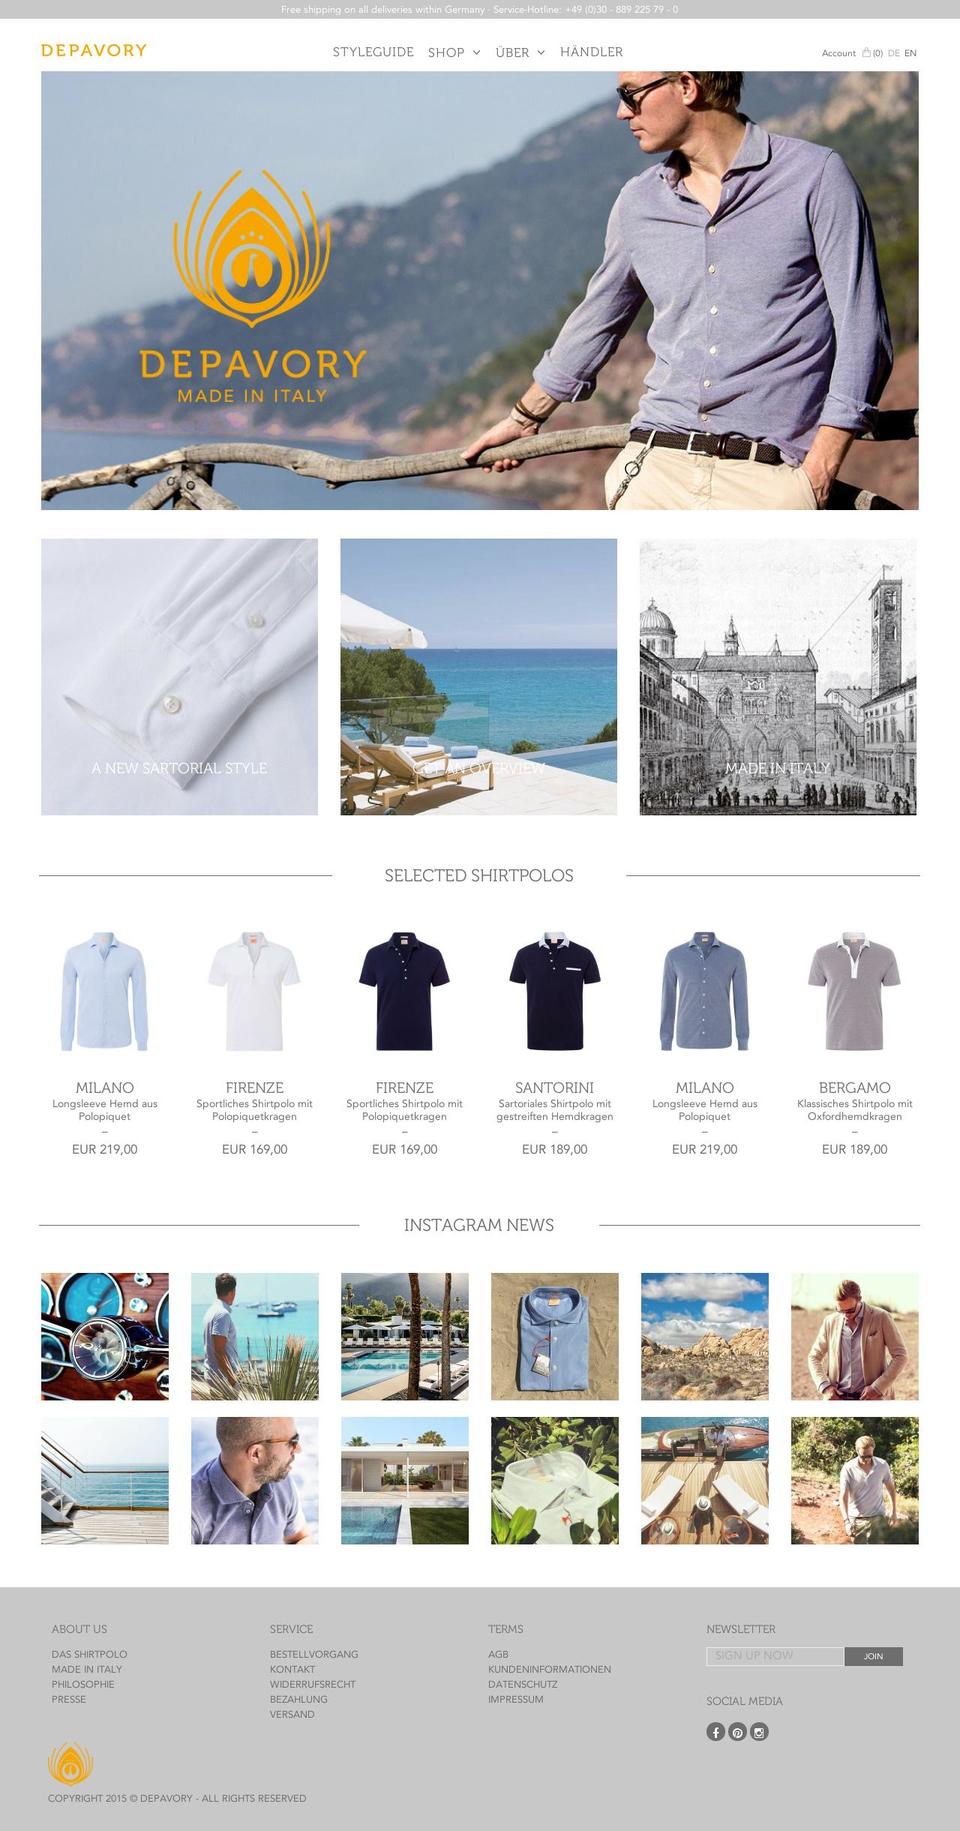 Depavory (2016-05-13) Shopify theme site example shirtpolo.eu